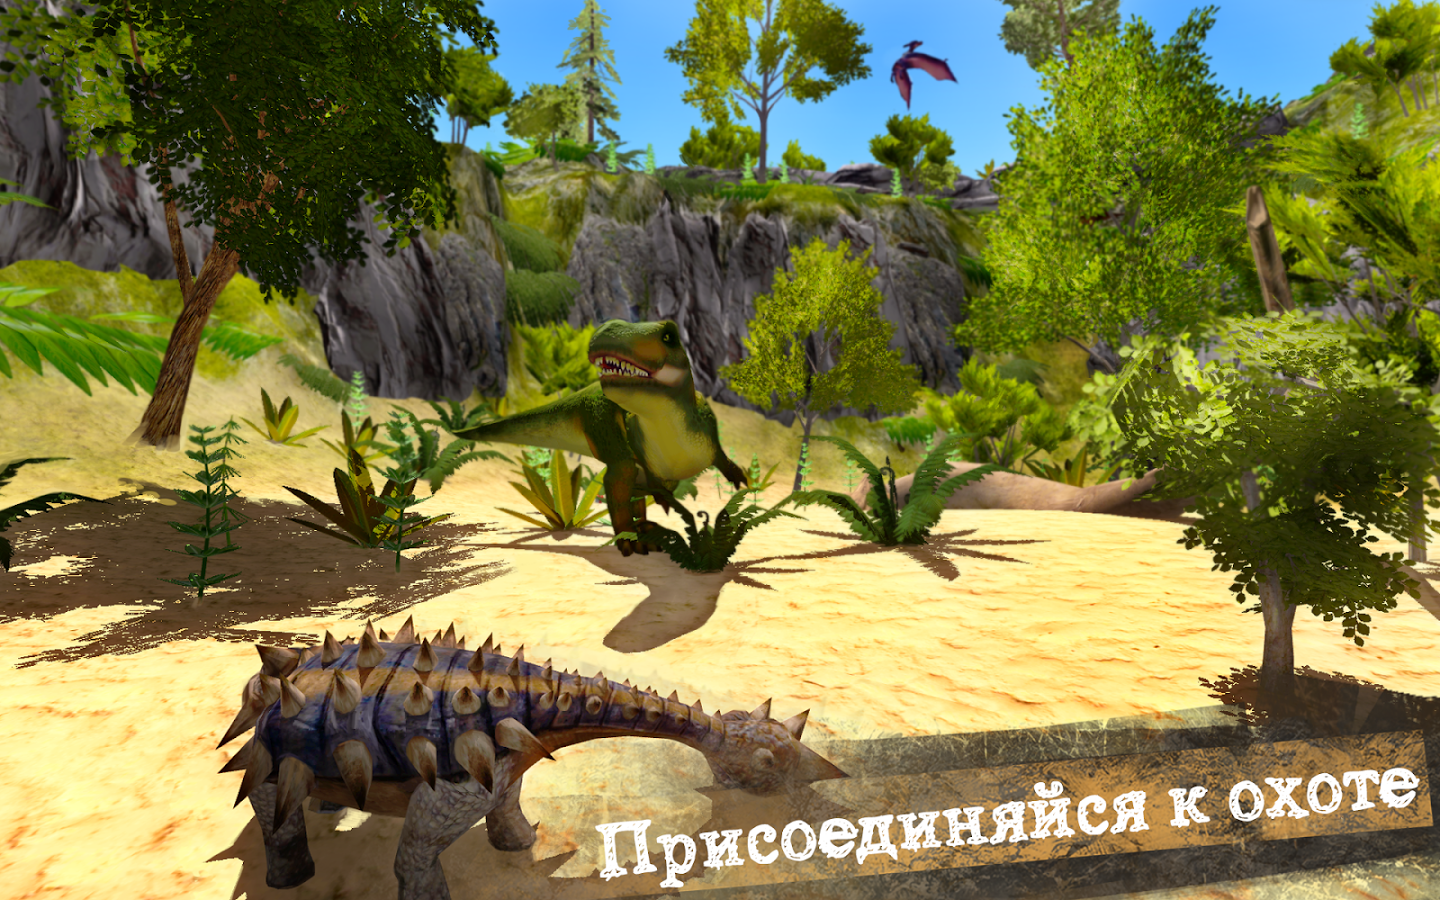 Скачать Jurassic Survival Island 3.3.0.8 для Android - 1440 x 900 png 2110kB